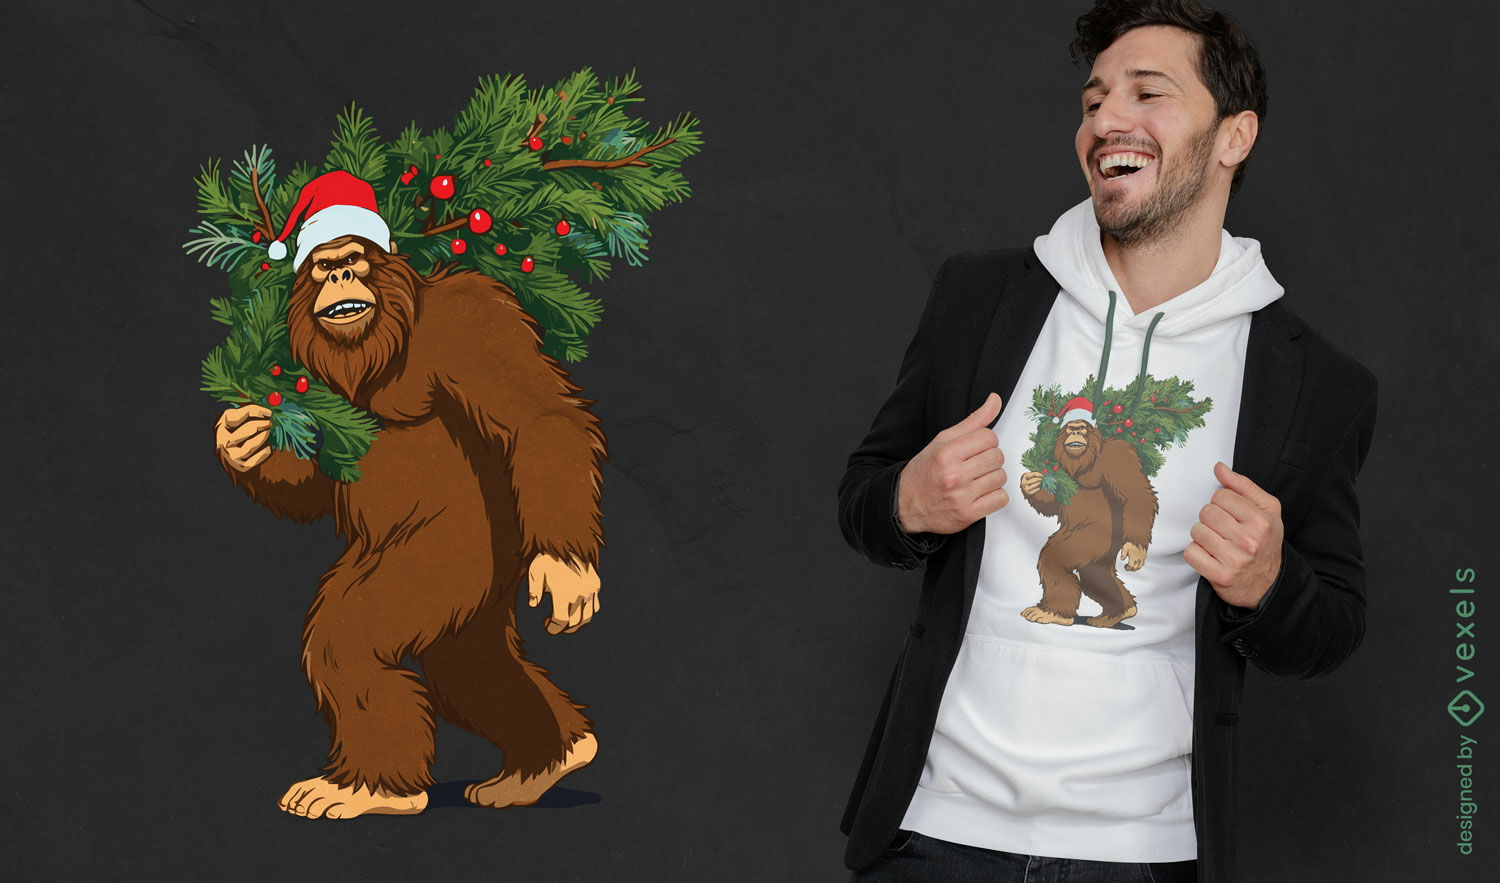 Diseño de camiseta navideña con temática de Bigfoot.